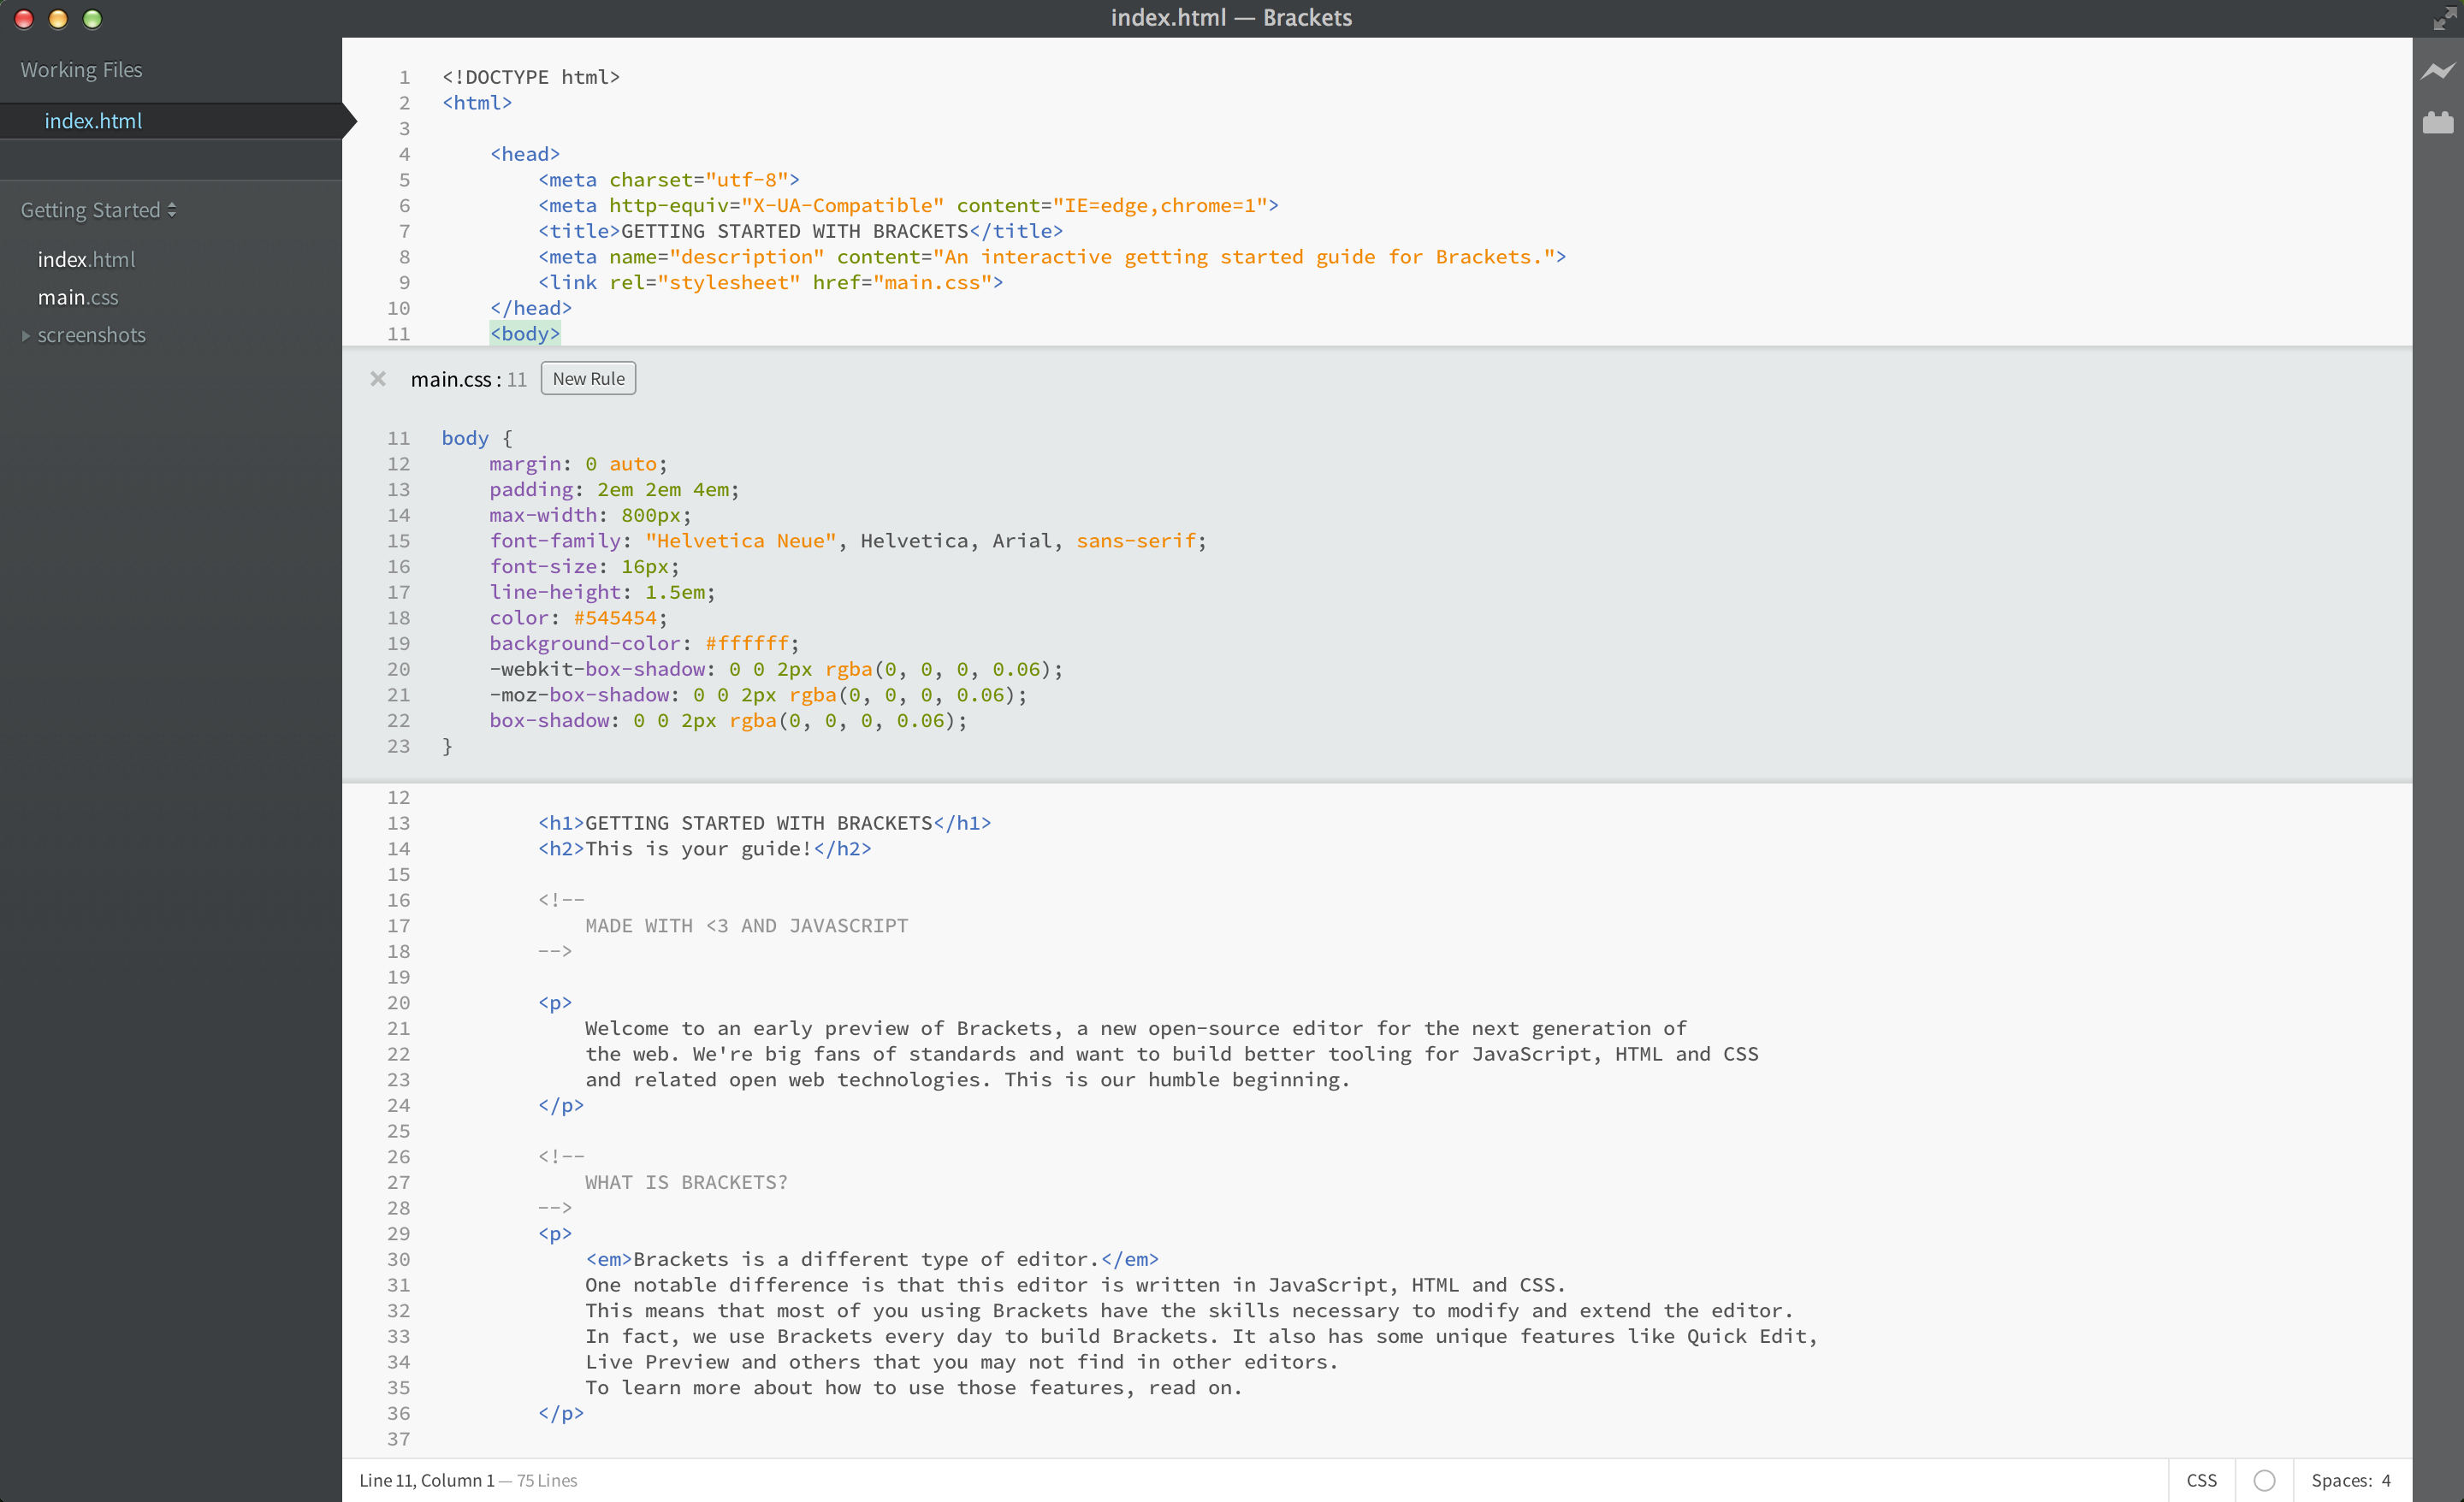 A screenshot showing CSS Quick Edit